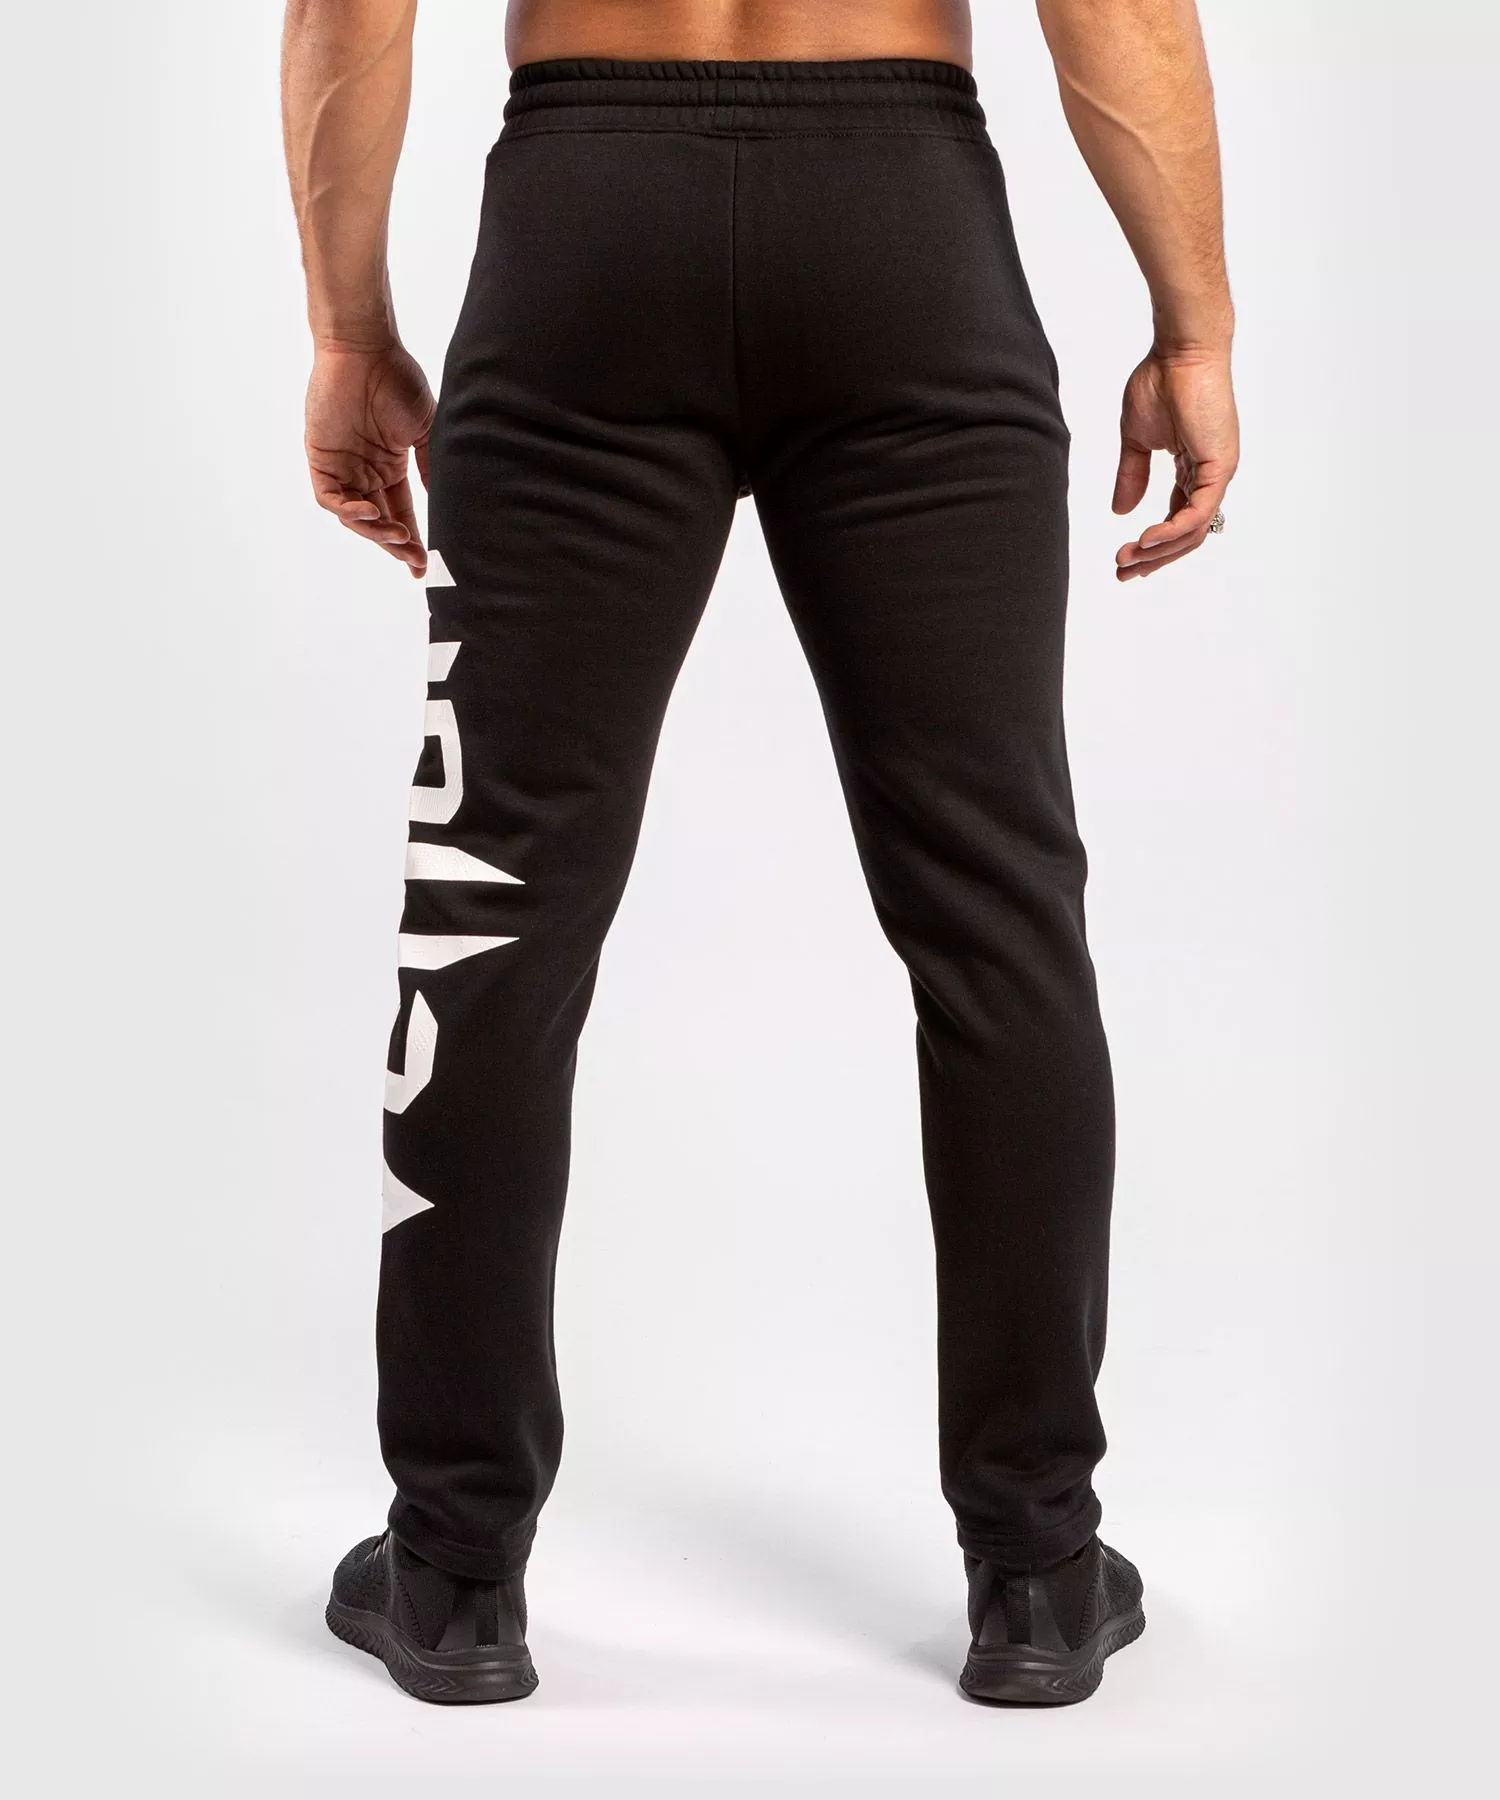 Спортивные штаны Venum Legacy Joggers S